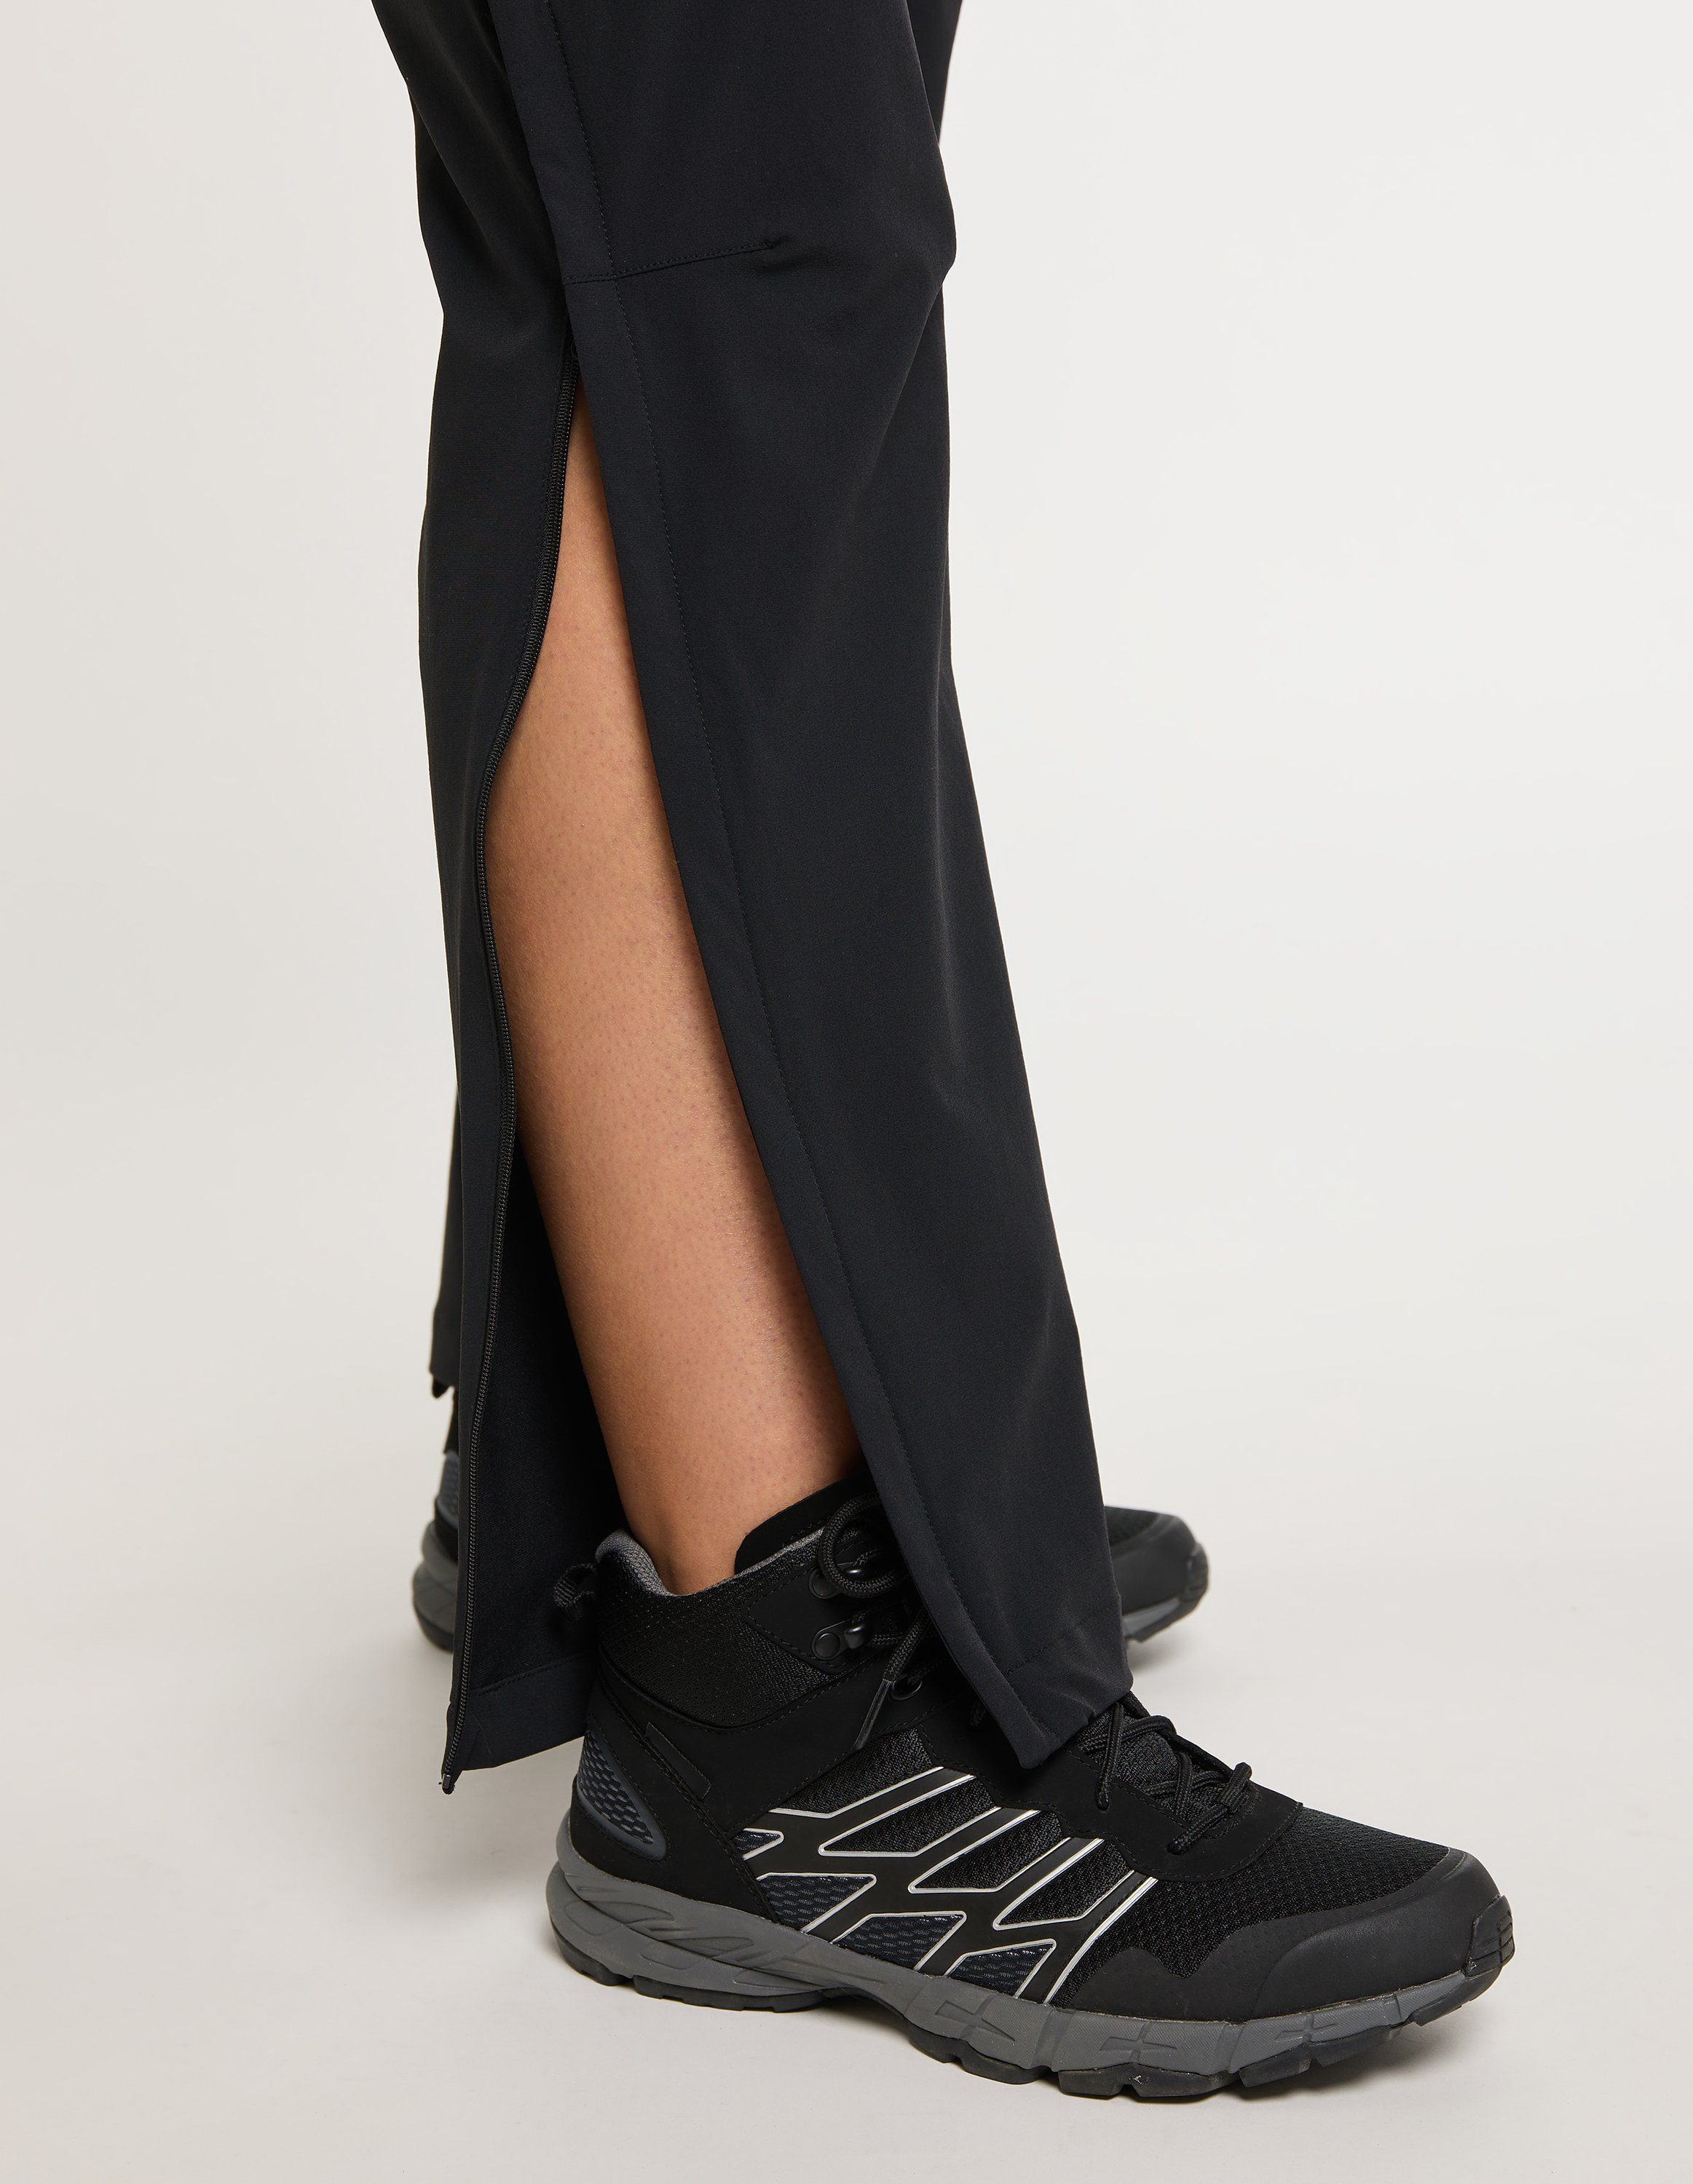 Hot-Sportswear Hose black Sporthose Tofino